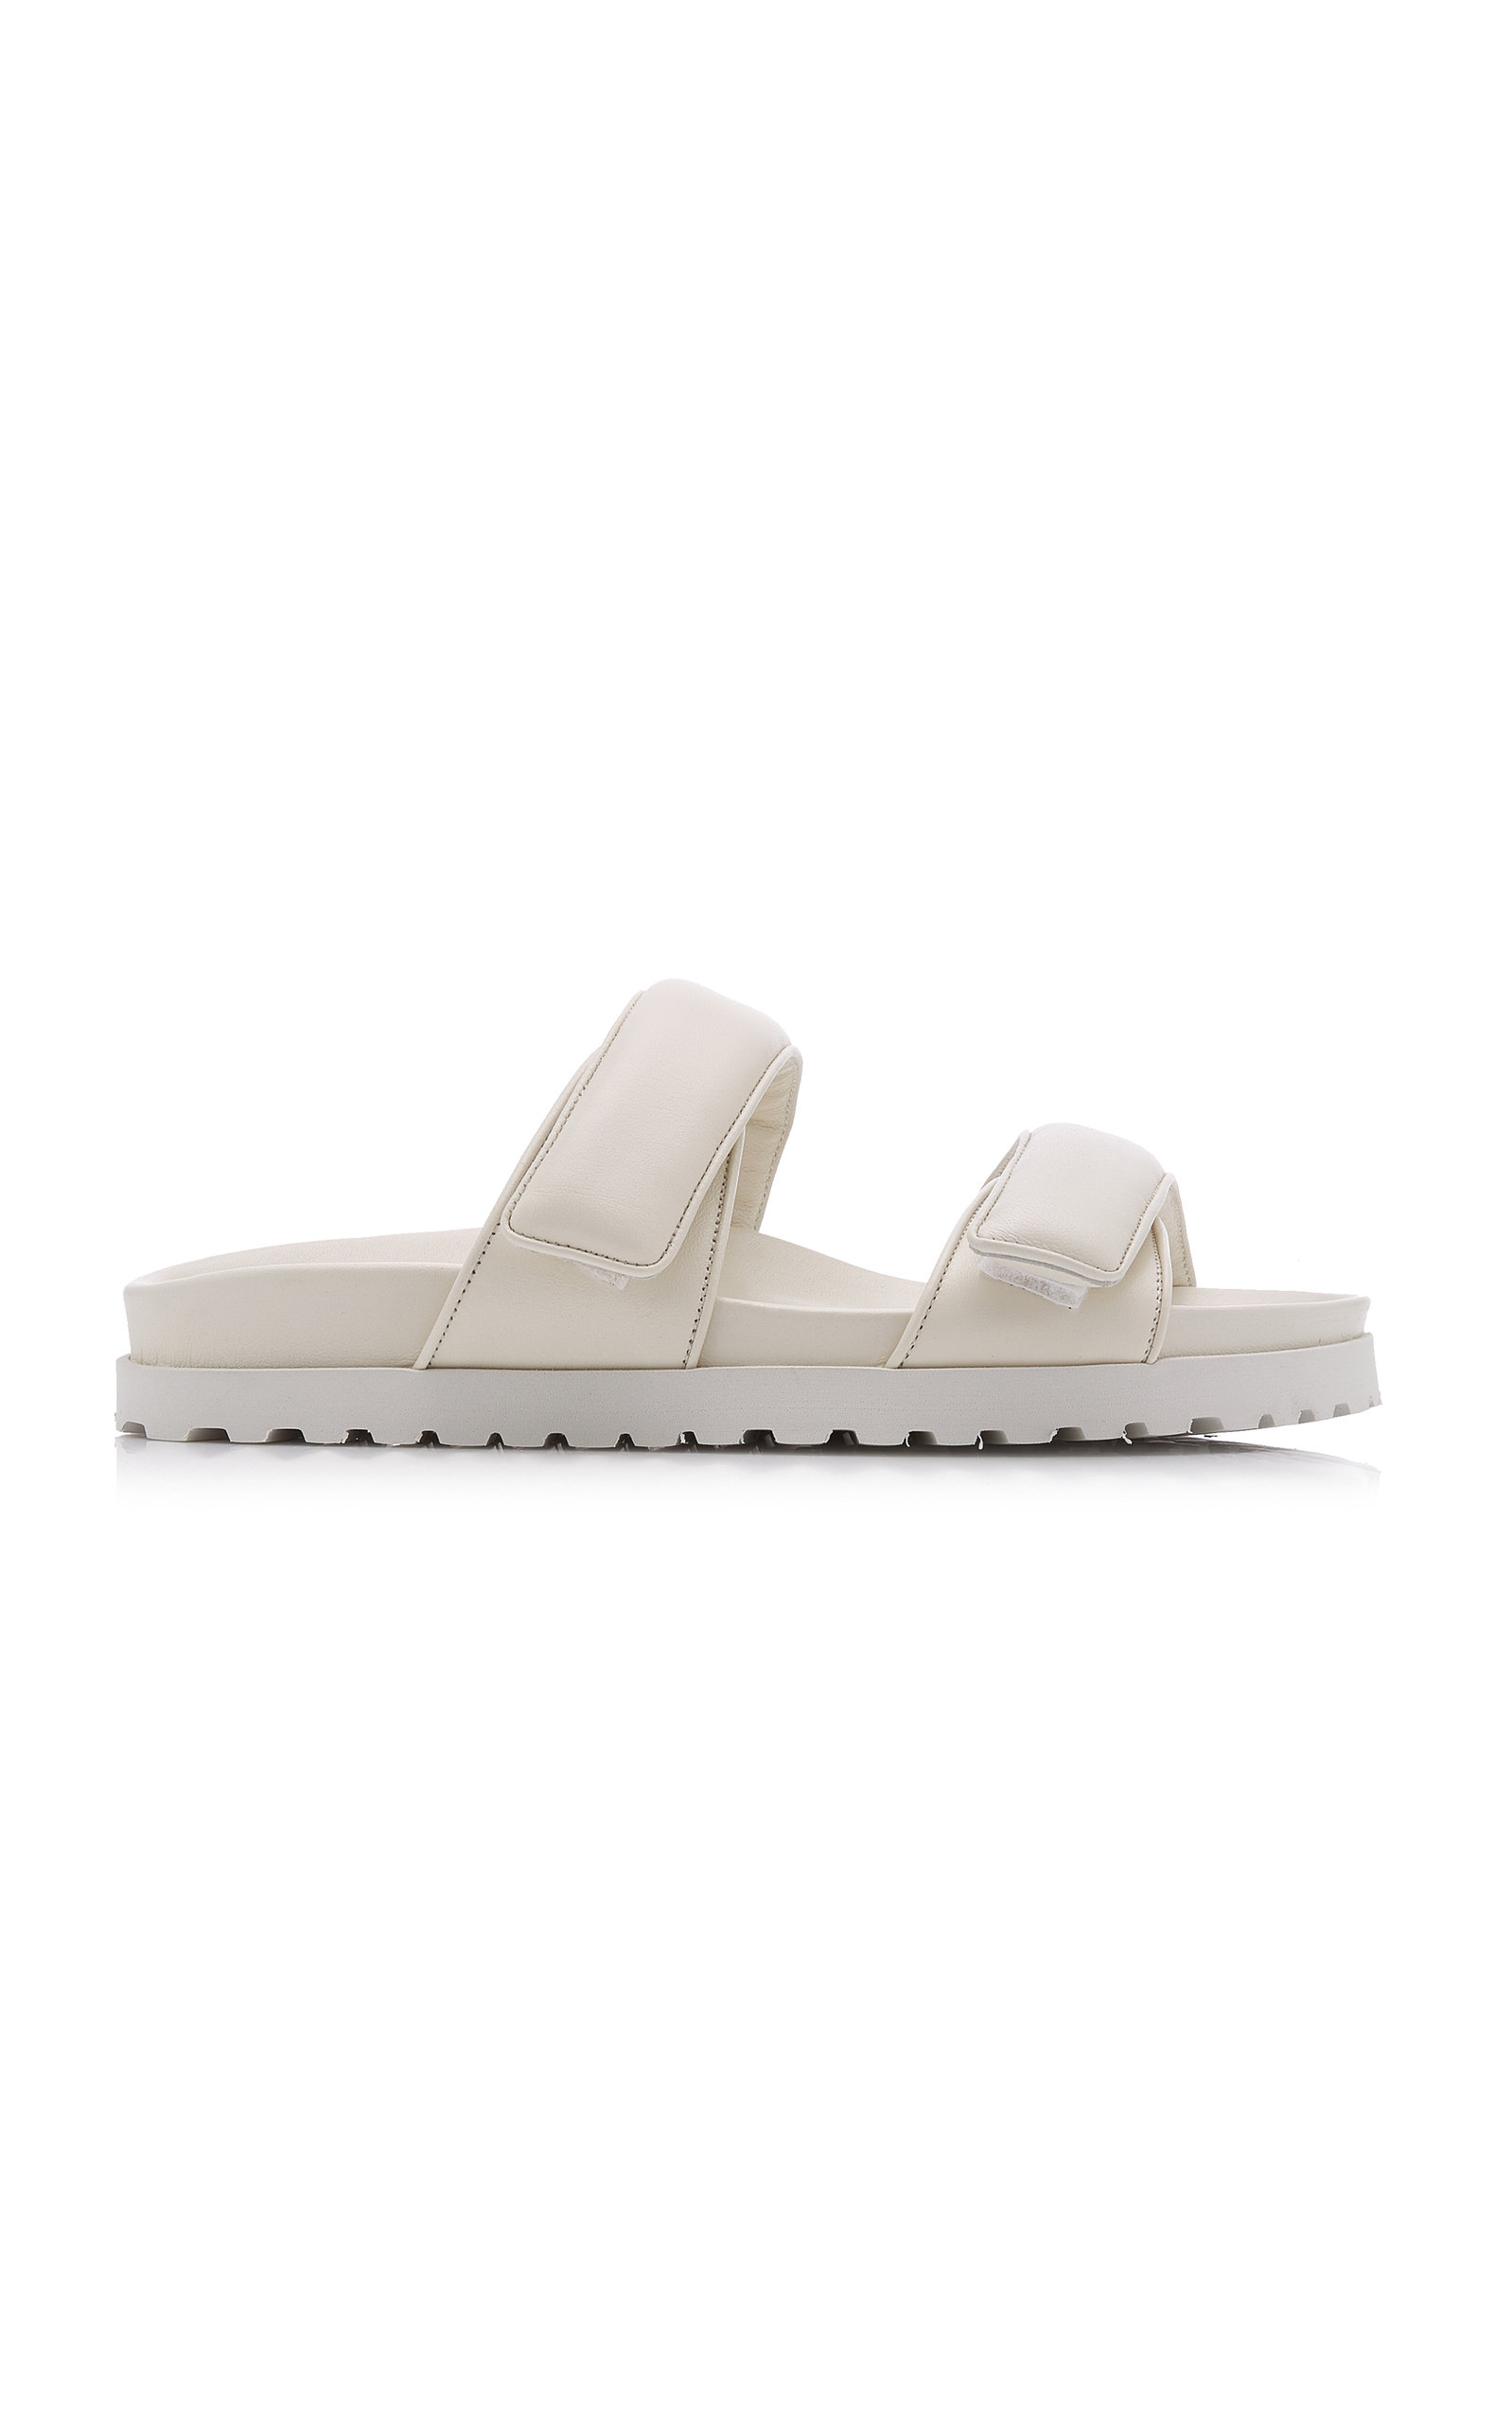 GIA x Pernille Teisbaek - Women's Padded Leather Platform Slide Sandals - White/tan - Moda Operandi